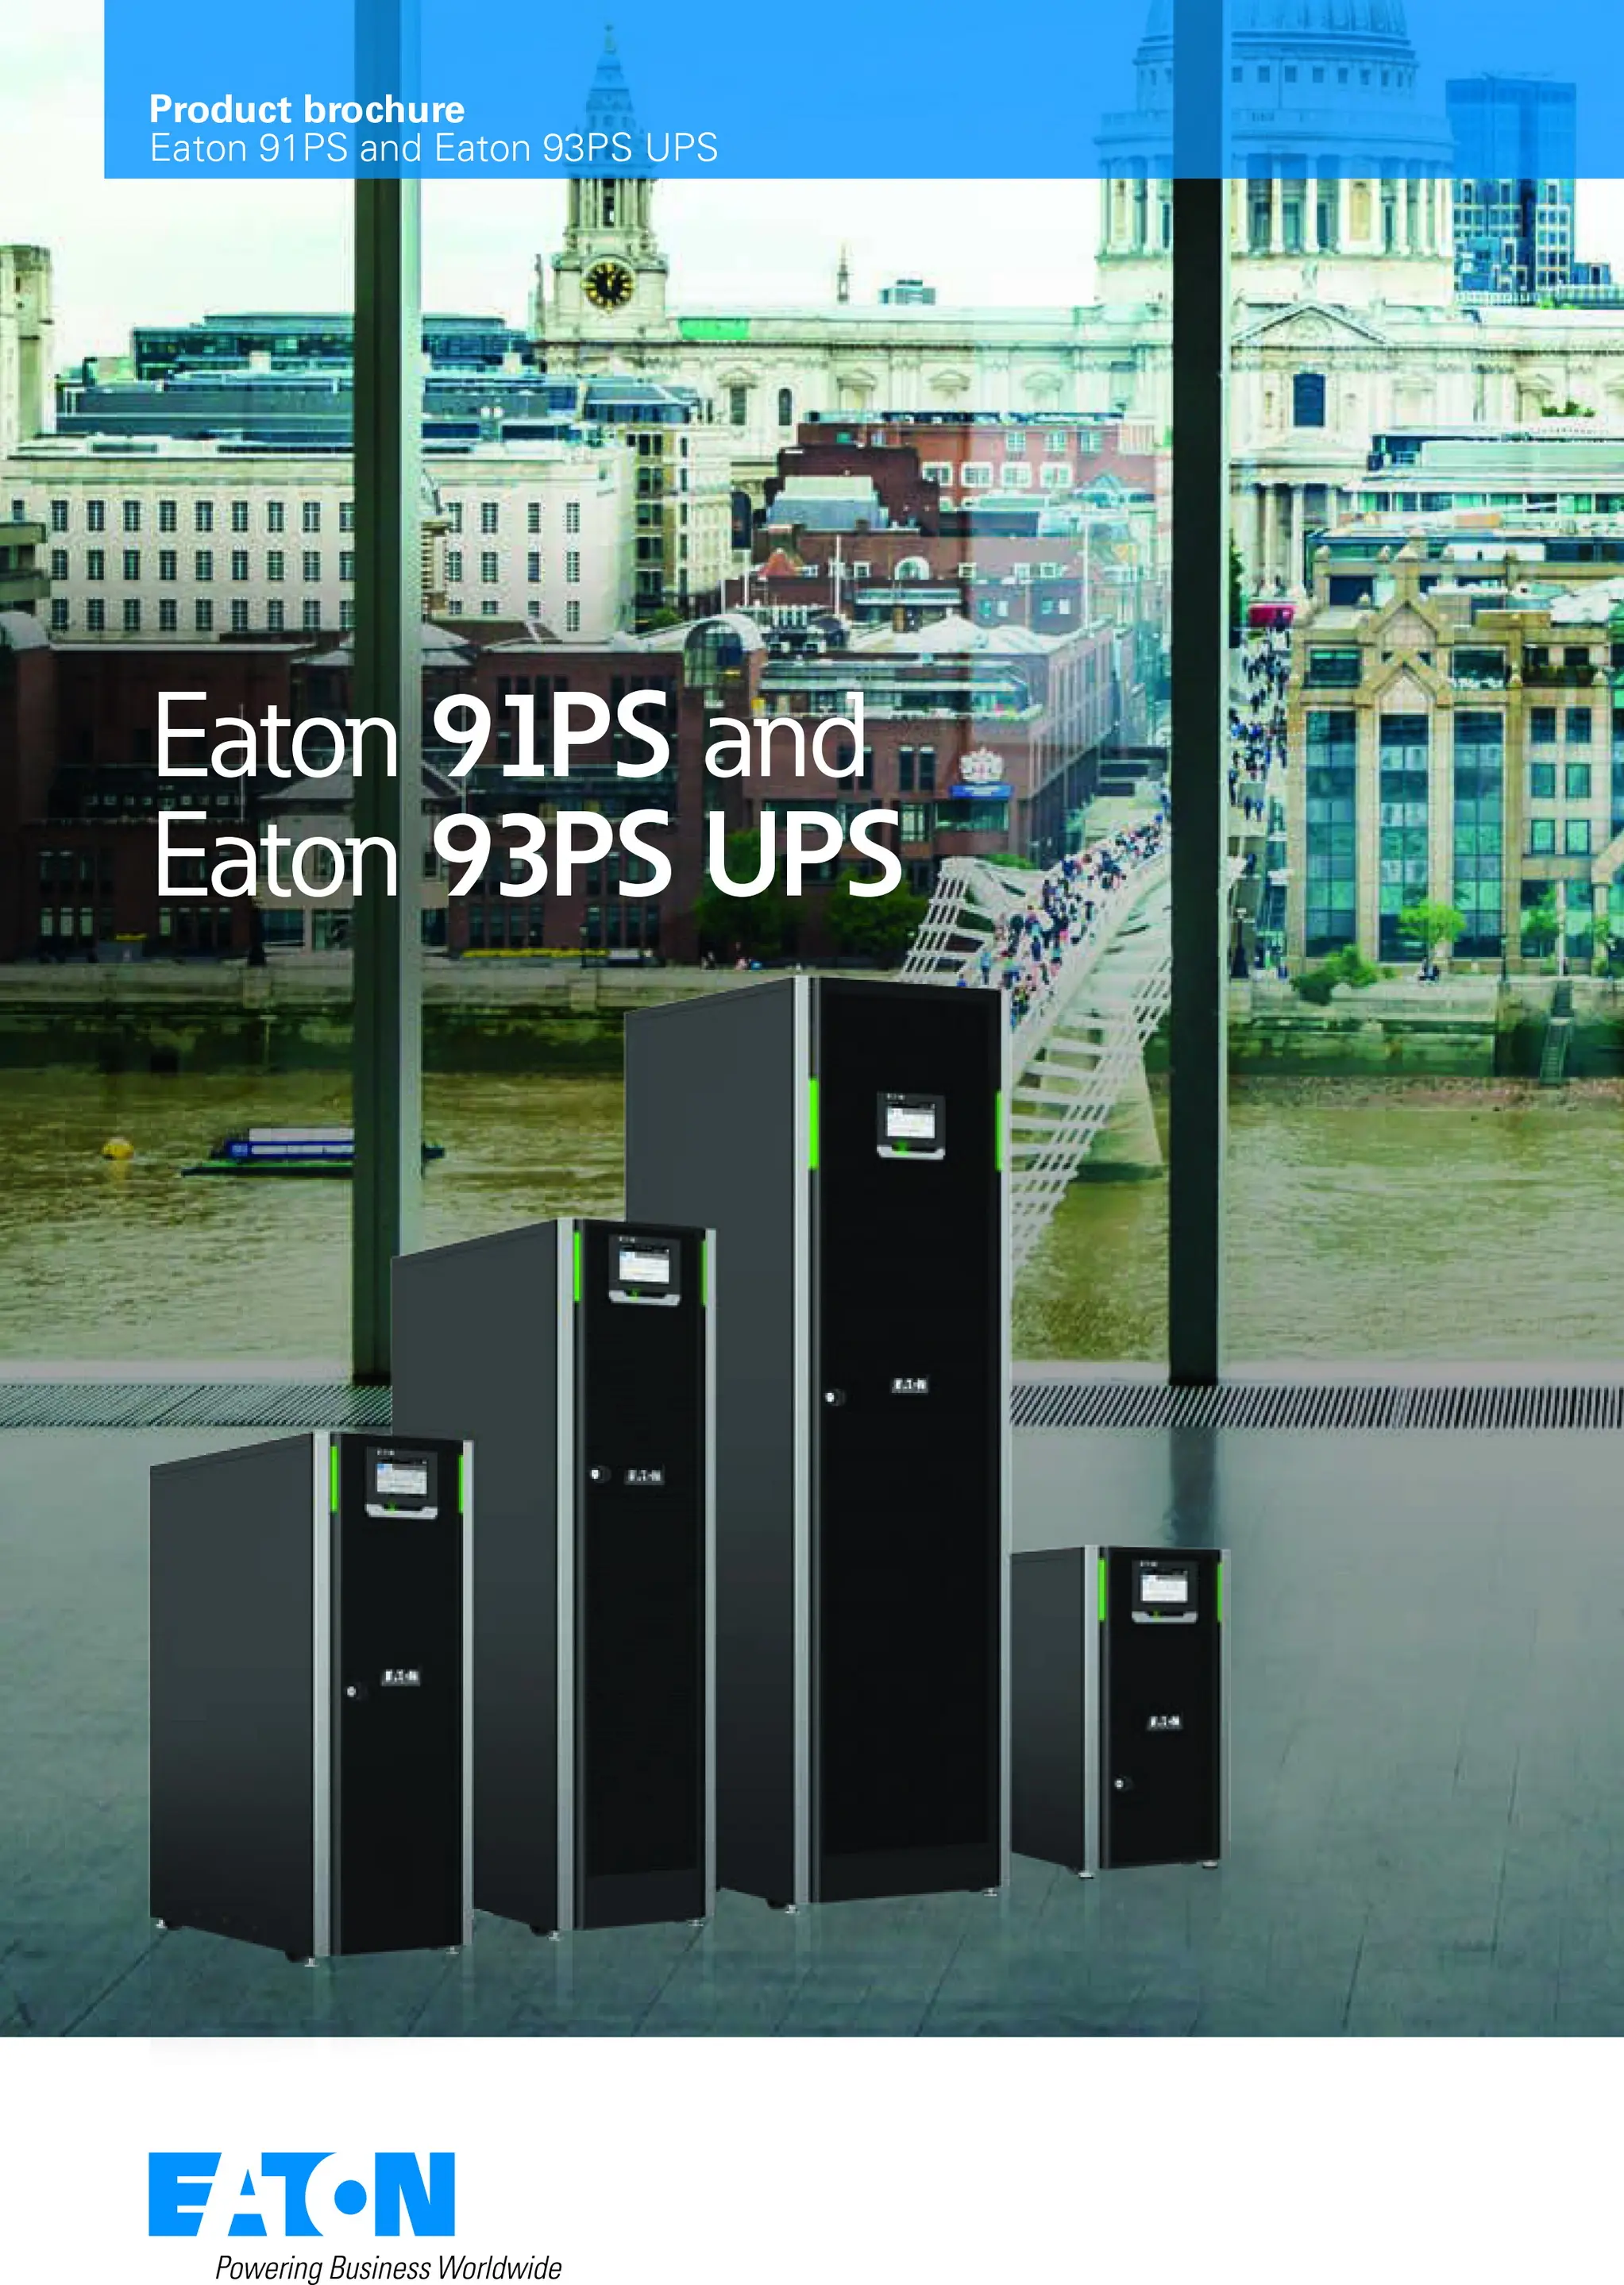 Eaton 93PS UPS 15kVA 15kW 3 phase with 1 string 32 pcs 12V 9Ah long life battery 93PS-15 20 -15-1x9Ah-LL-6 to replace 9355 UPS